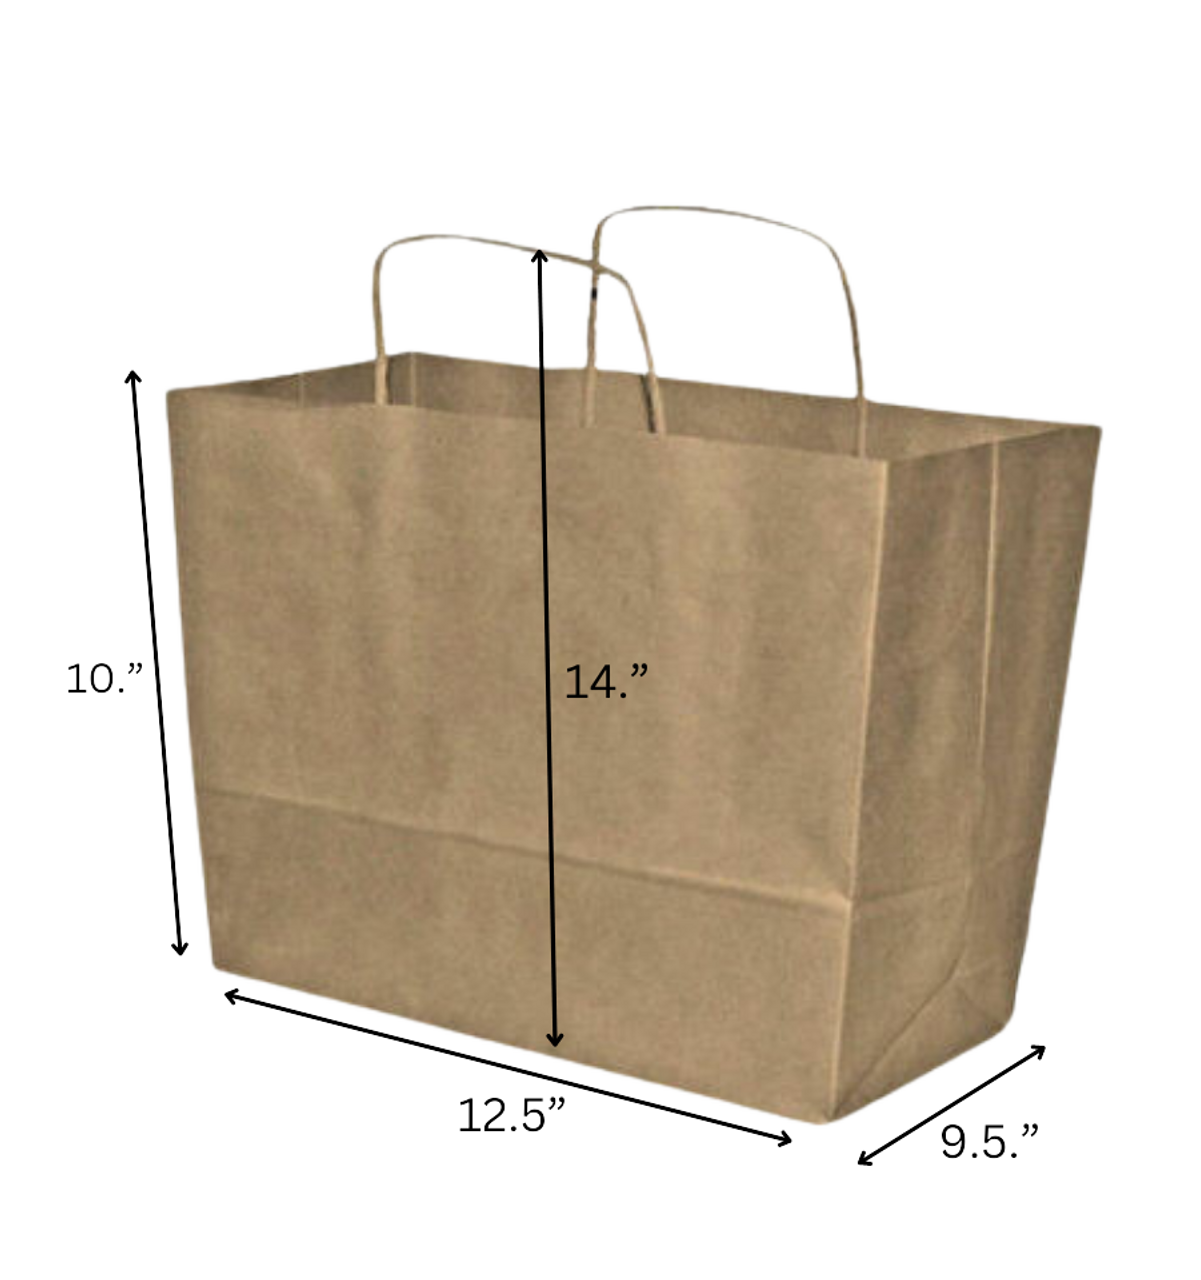 Extra Large Brown Kraft Twist Handle Paper Carrier Bags